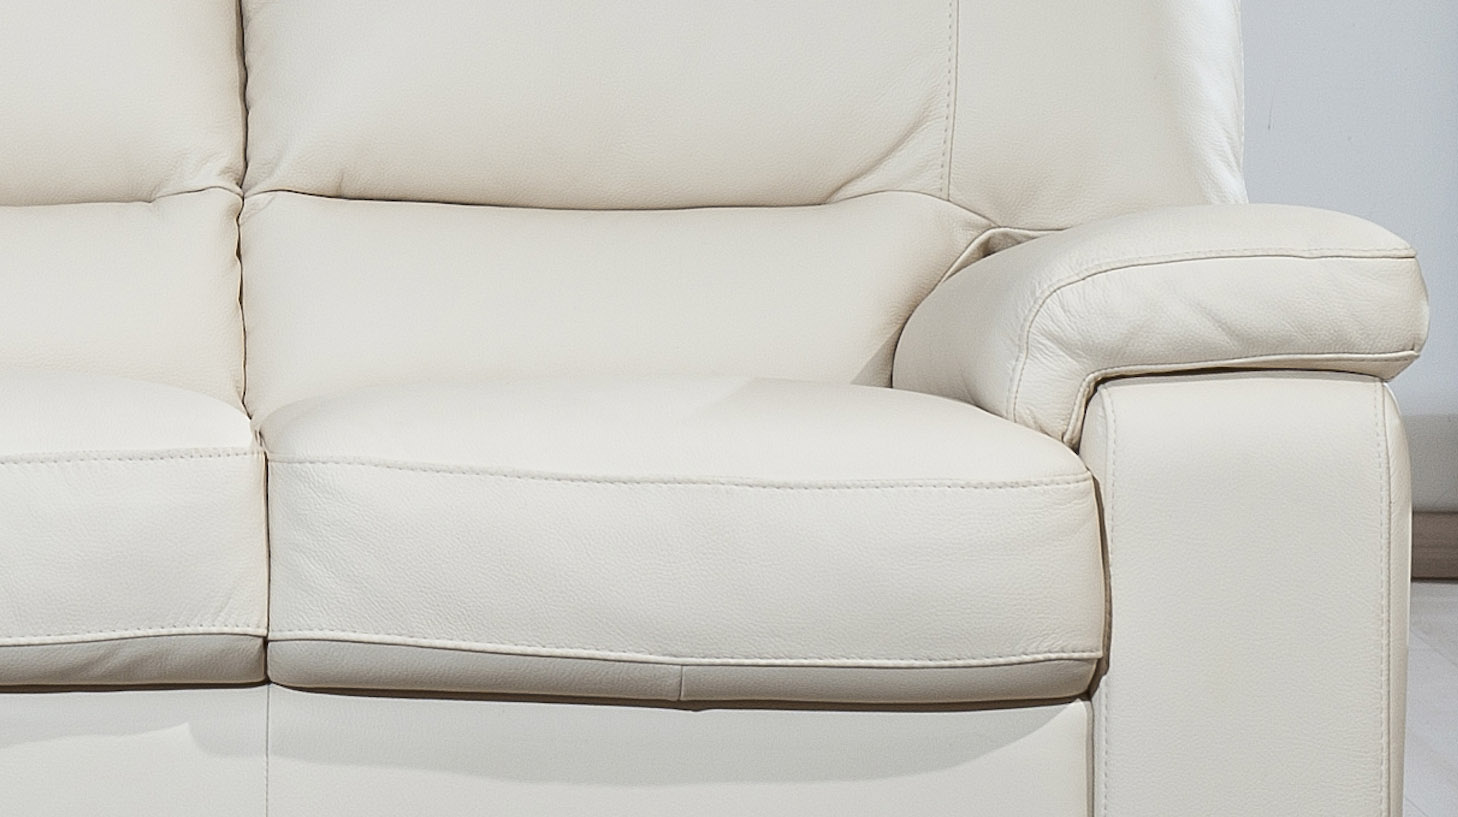 Luxor Italian Leather Sofa Set with Sliding Seats